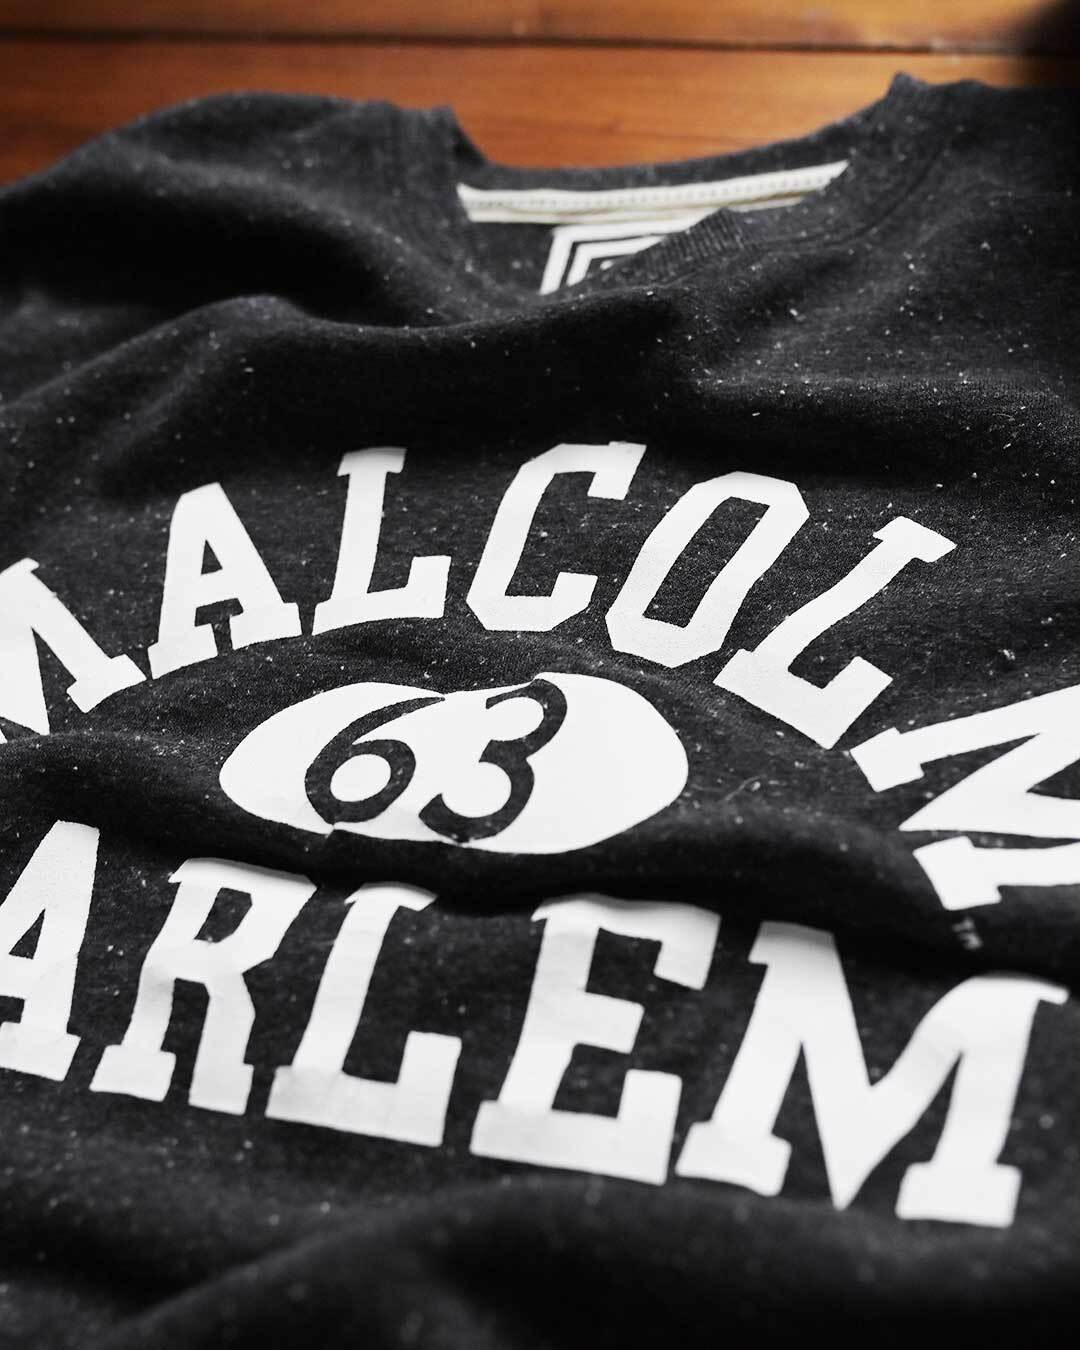 BHT - Malcolm X Harlem Black Sweatshirt - Roots of Fight